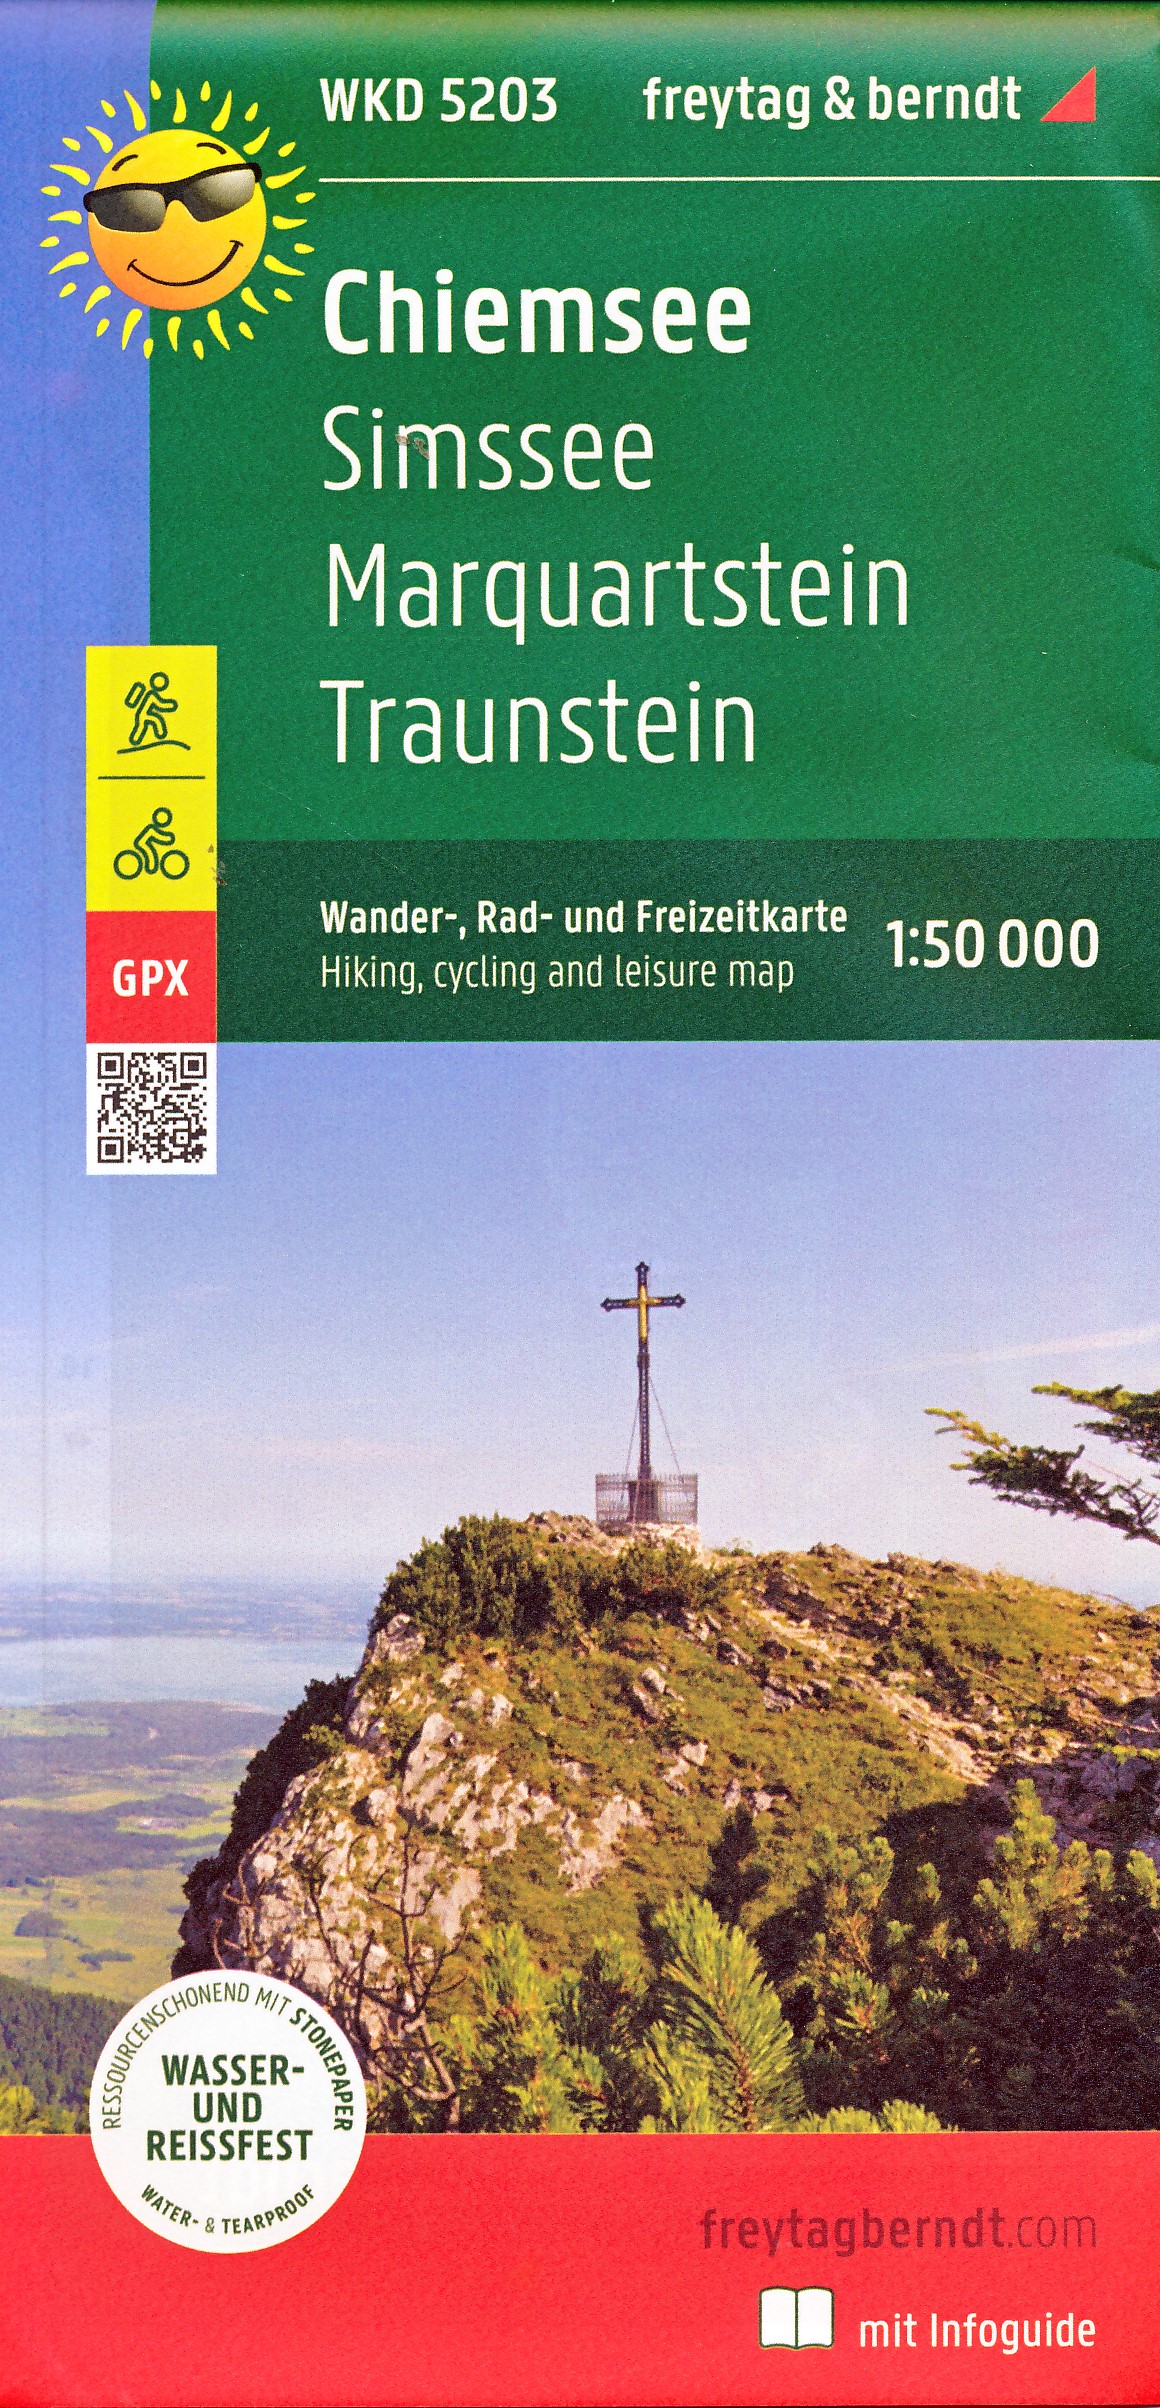 Online bestellen: Wandelkaart - Fietskaart WKD5203 Chiemsee | Freytag & Berndt